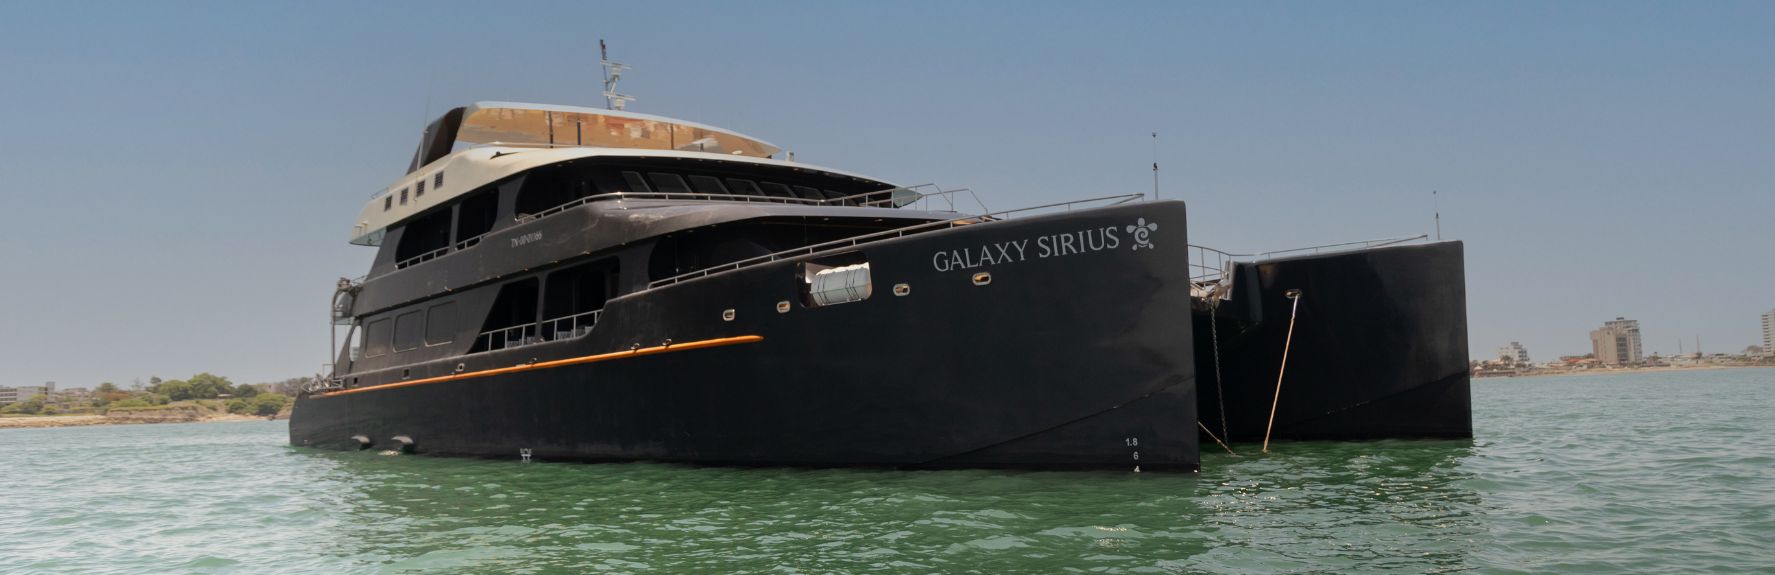 Galaxy Sirius Cruise